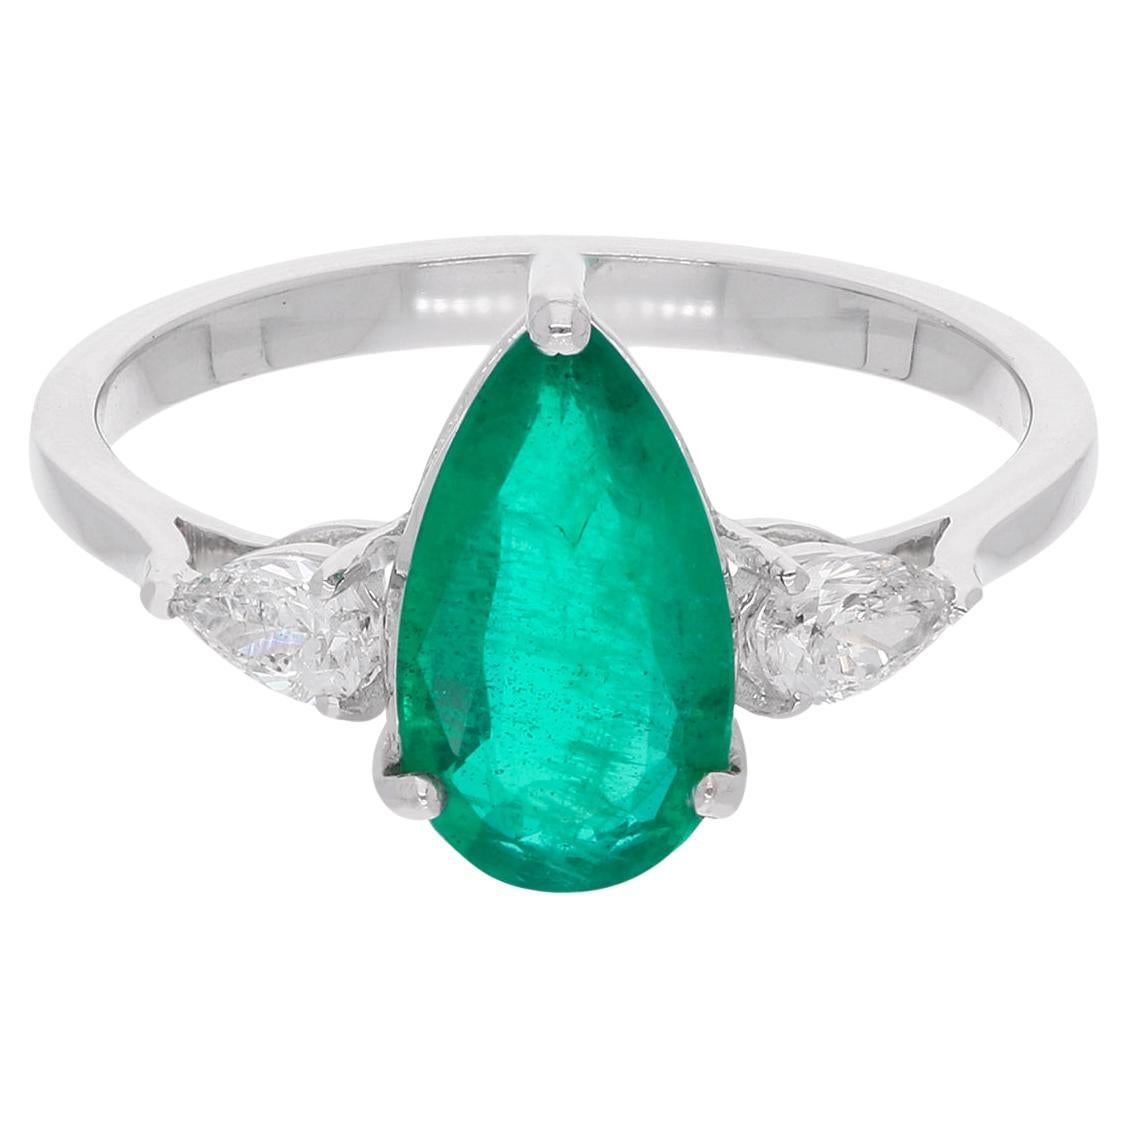 Real Pear Zambian Emerald Gemstone Ring Diamond 18 Karat White Gold Fine Jewelry